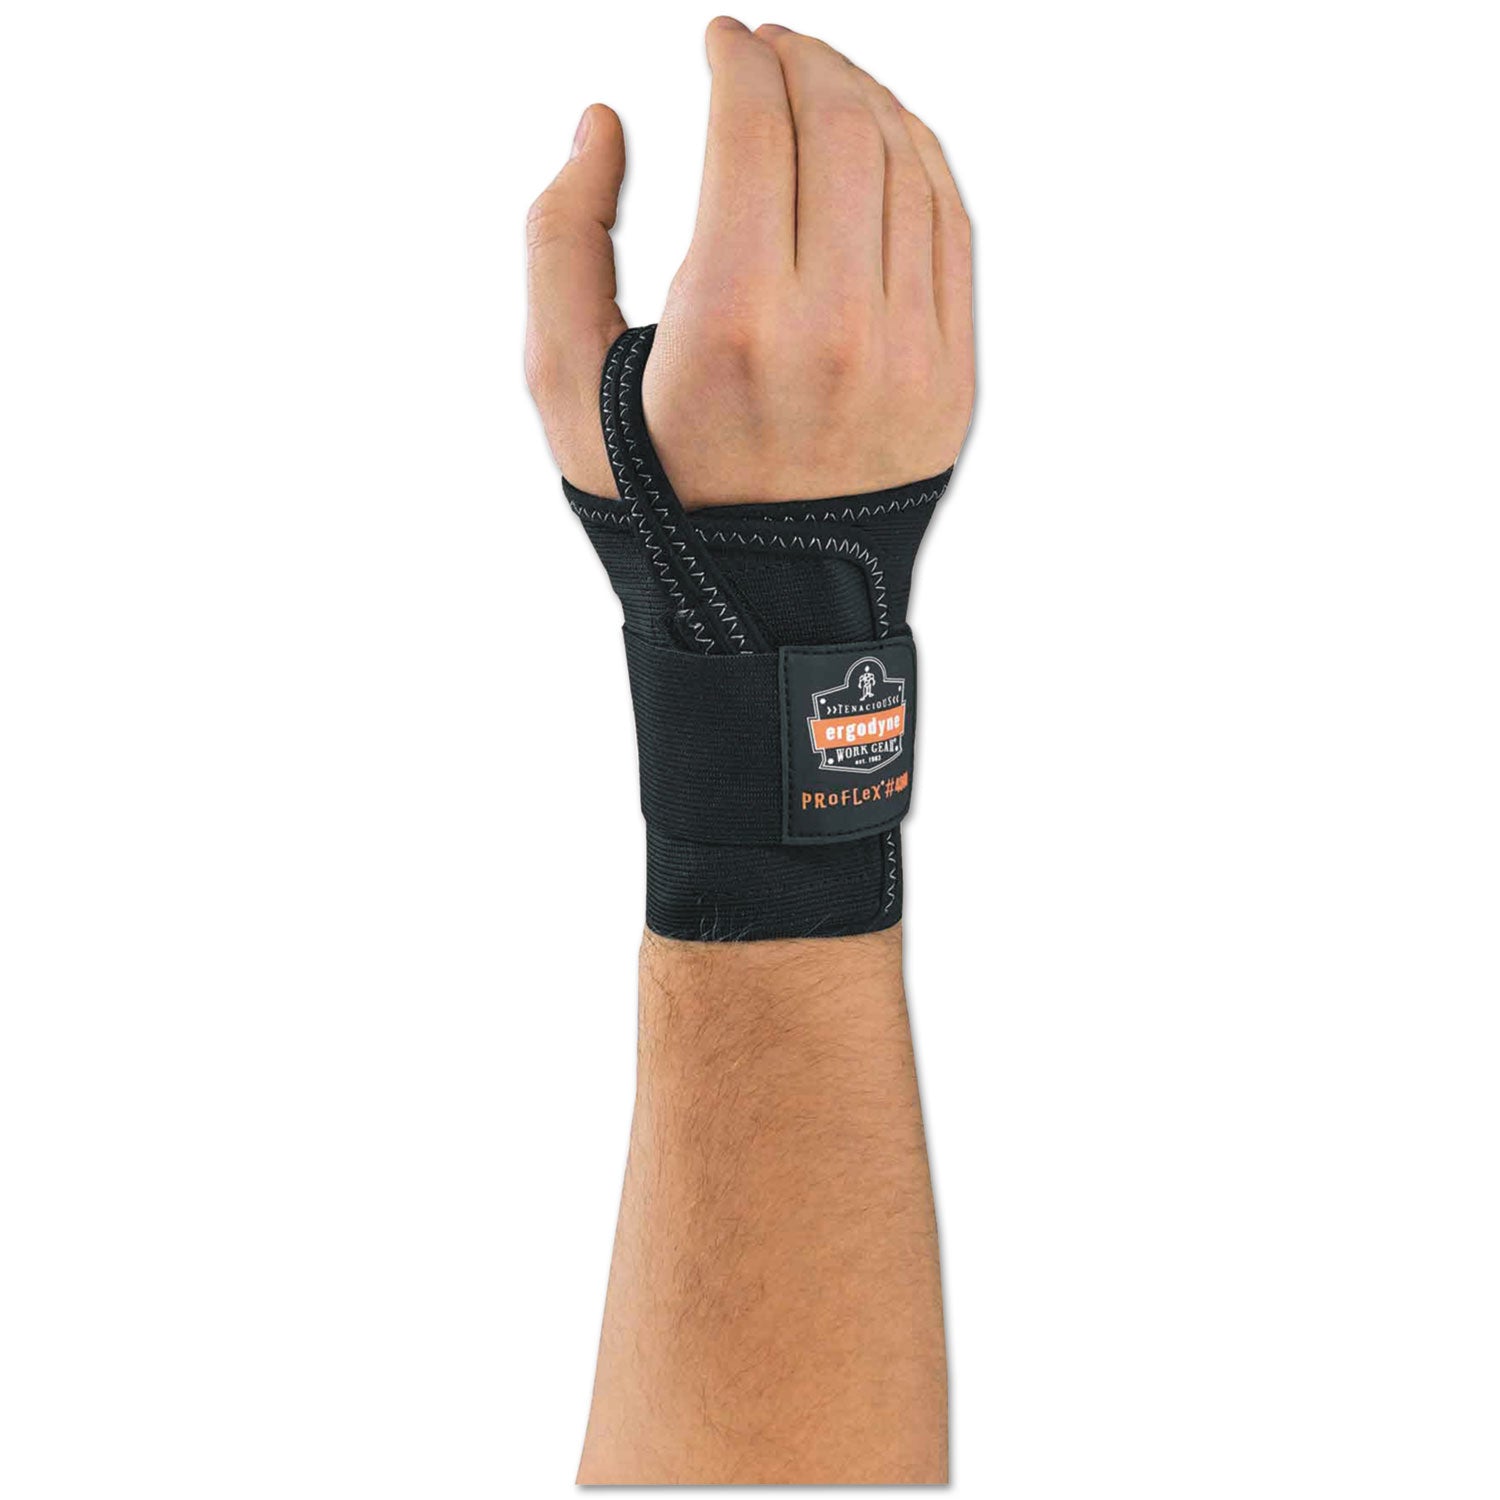 proflex-4000-wrist-support-medium-6-7-fits-right-hand-black_ego70004 - 1